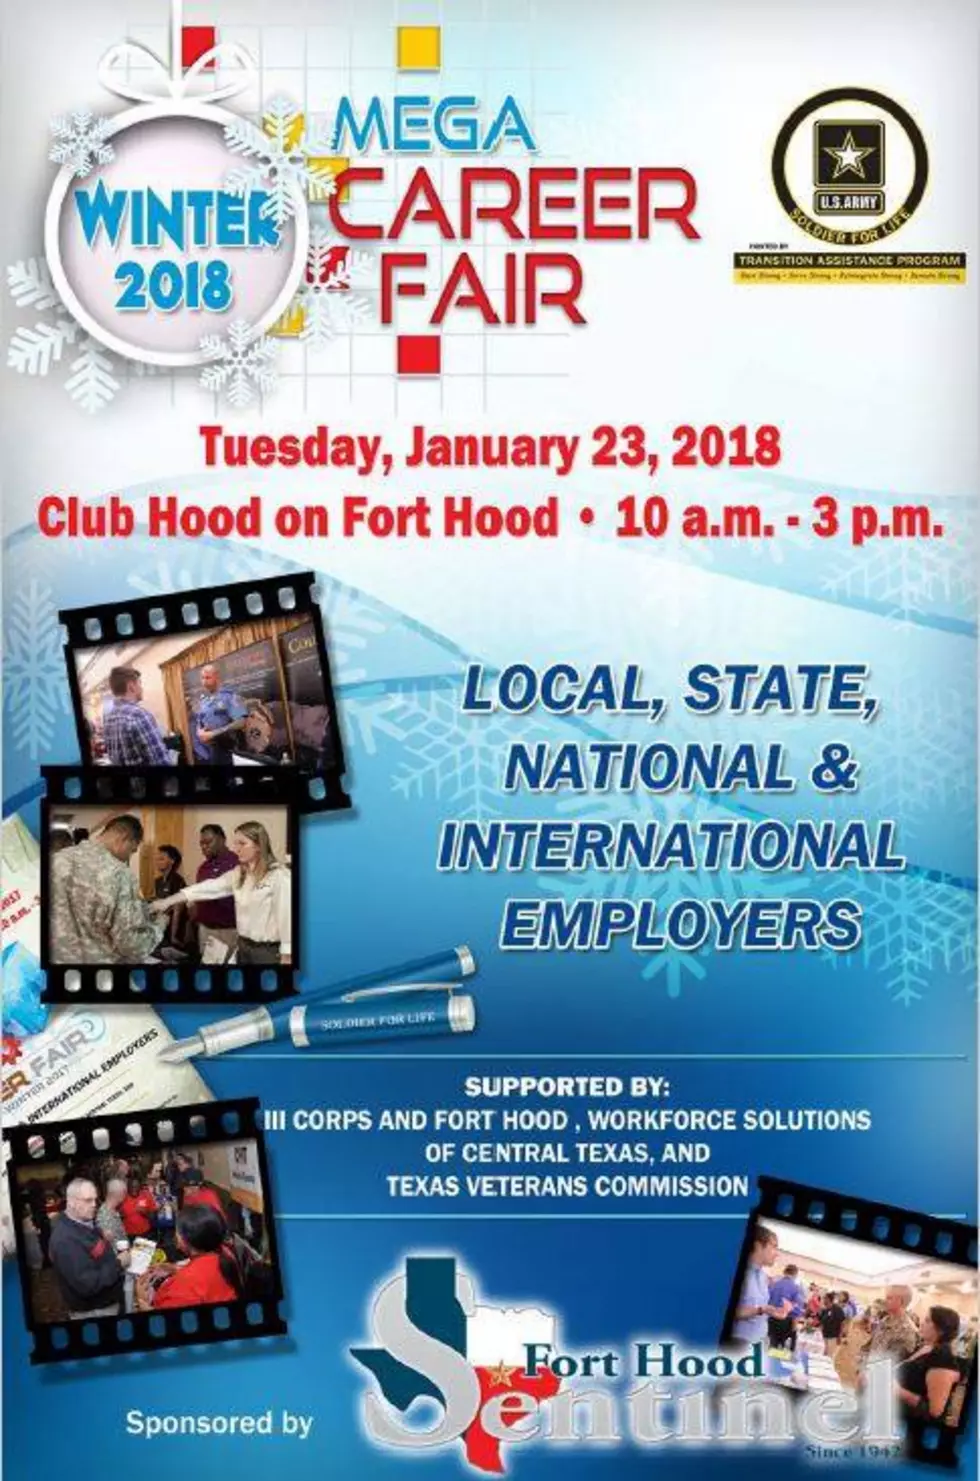 Fort Hood TAP Winter Mega Career Fair Tuesday